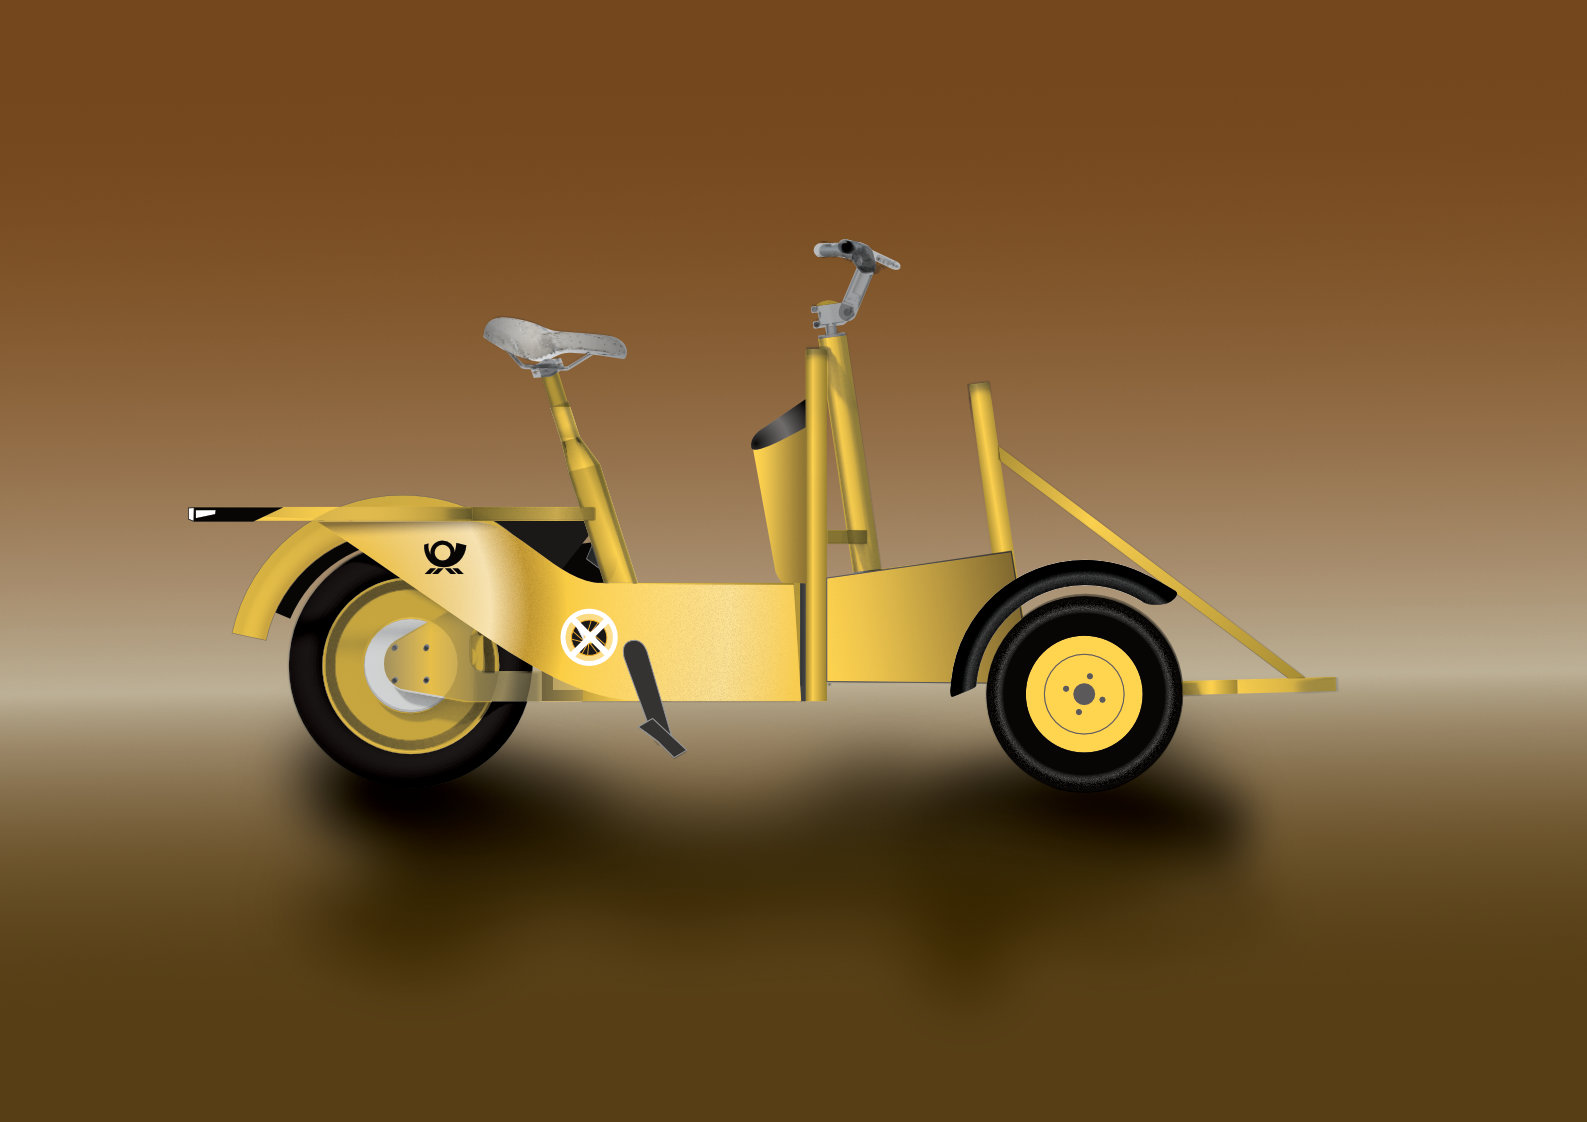 ANT Transportbike Design City